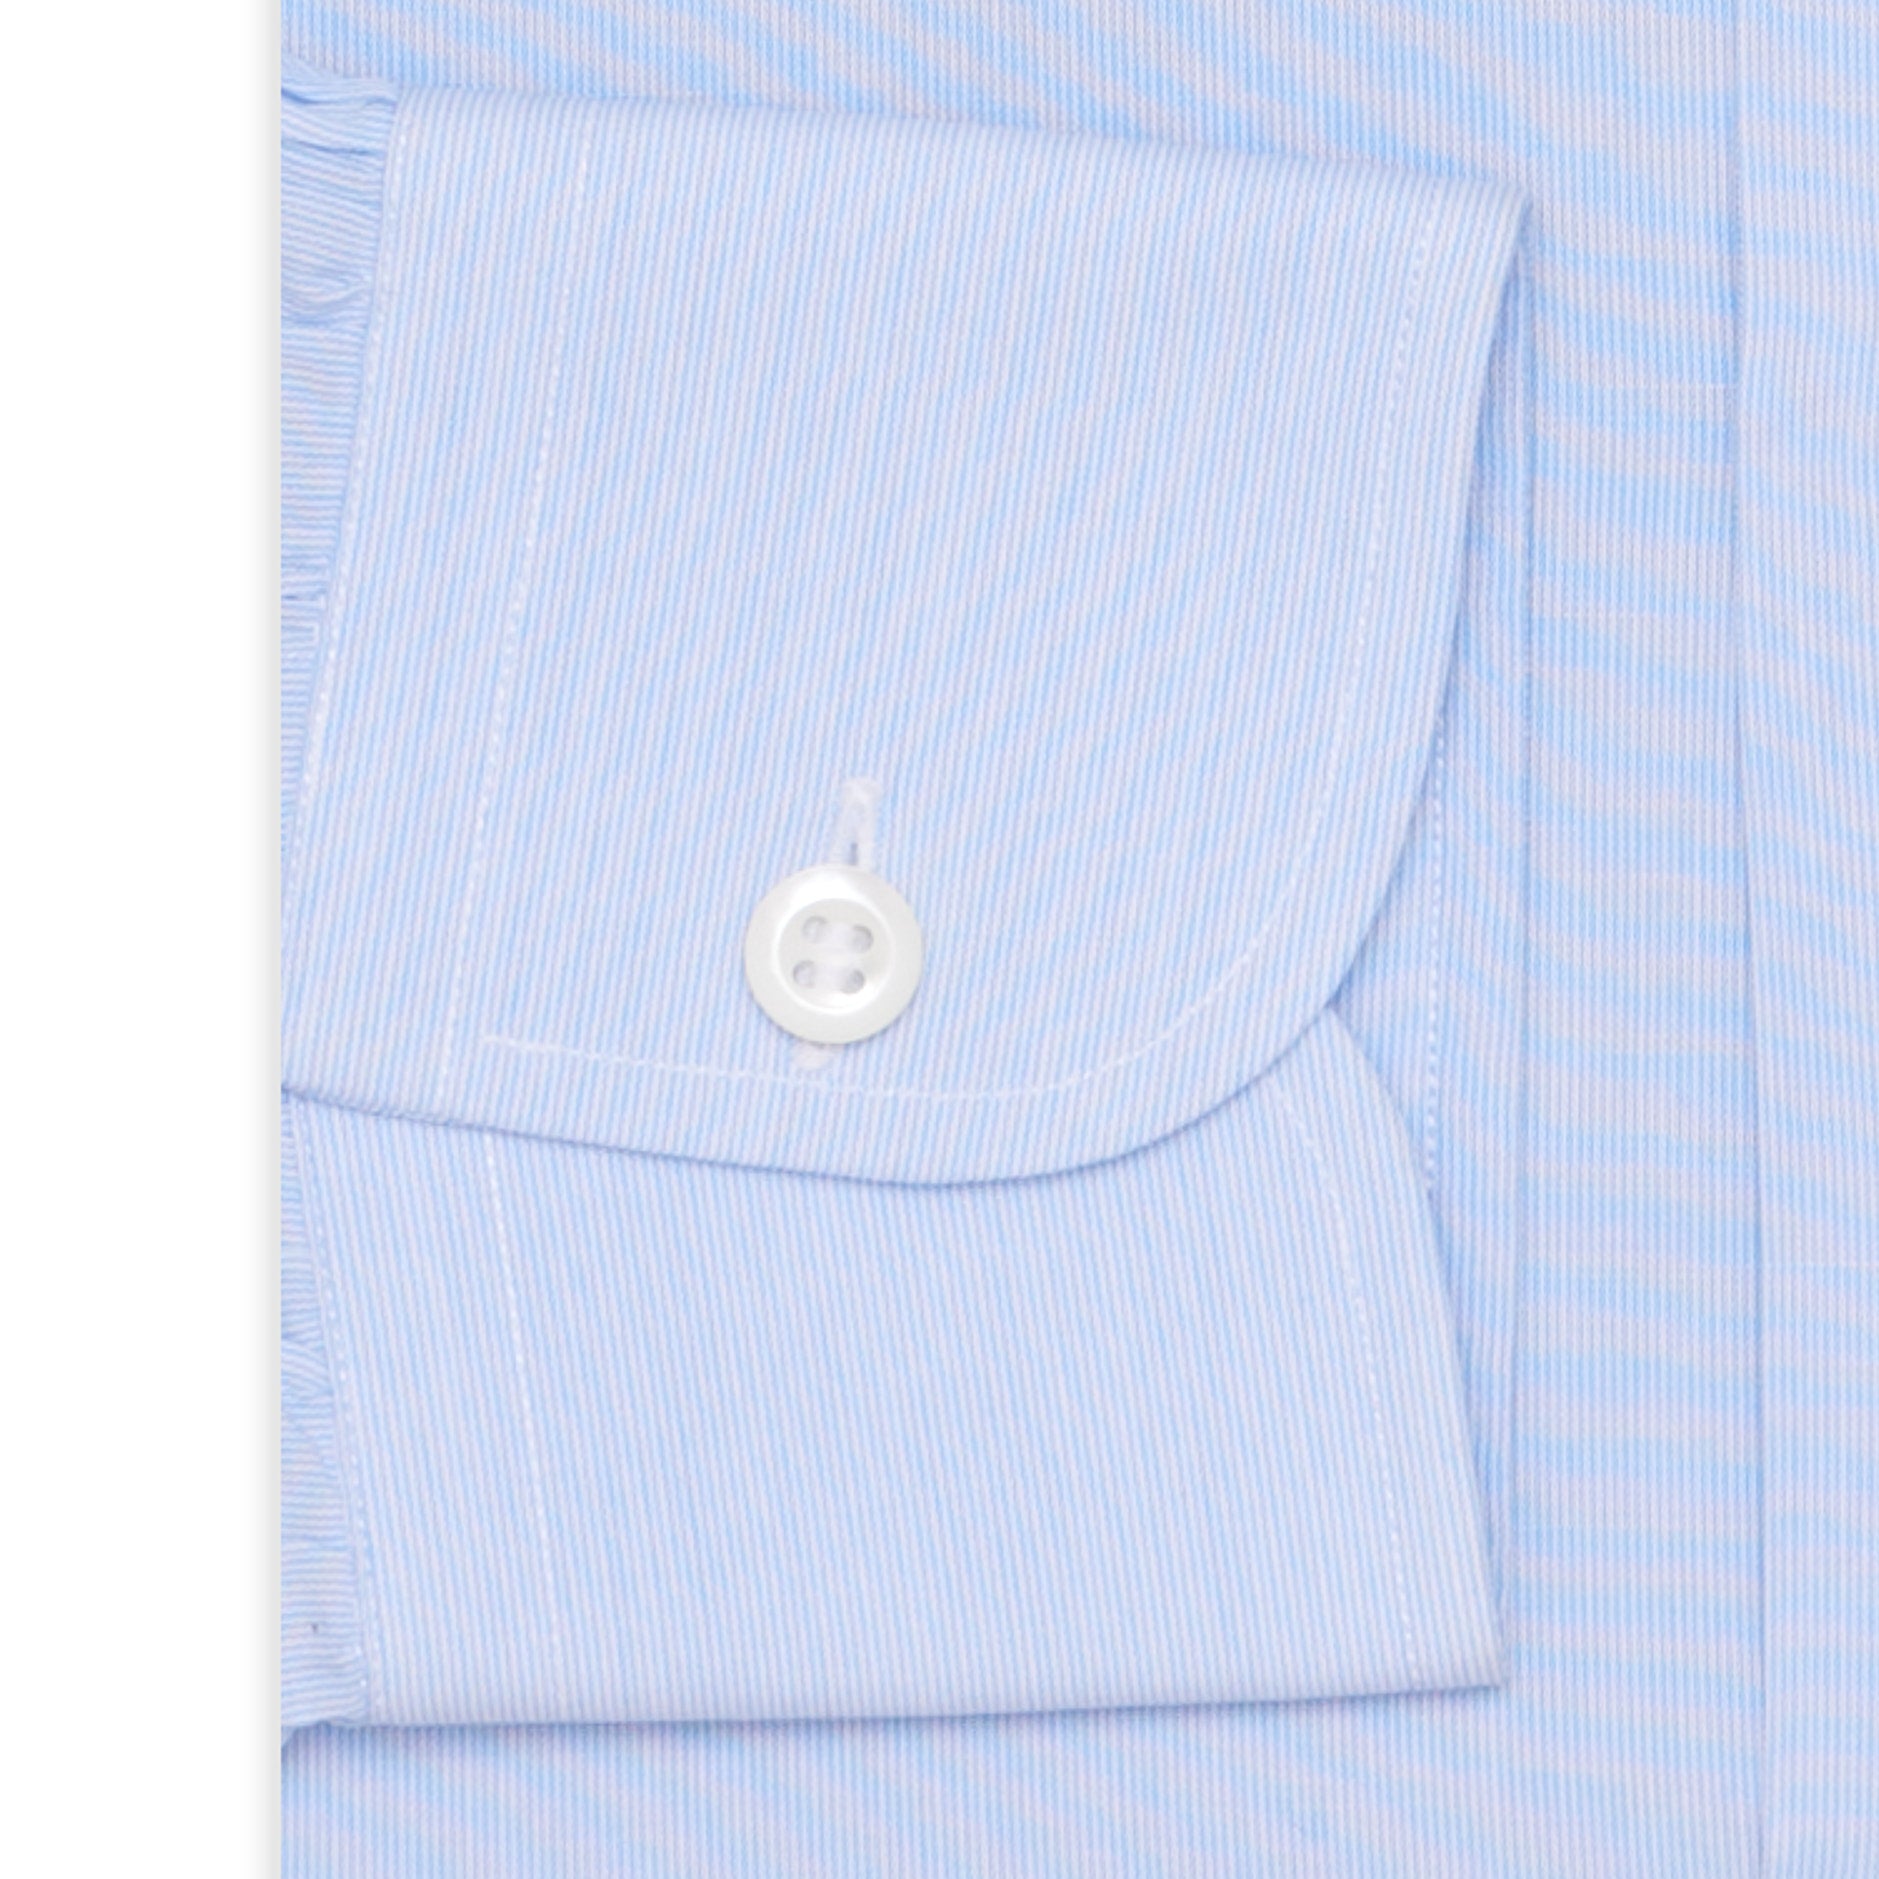 BESPOKE ATHENS Handmade Light Blue Hairline Striped Cotton Shirt NEW Slim Fit